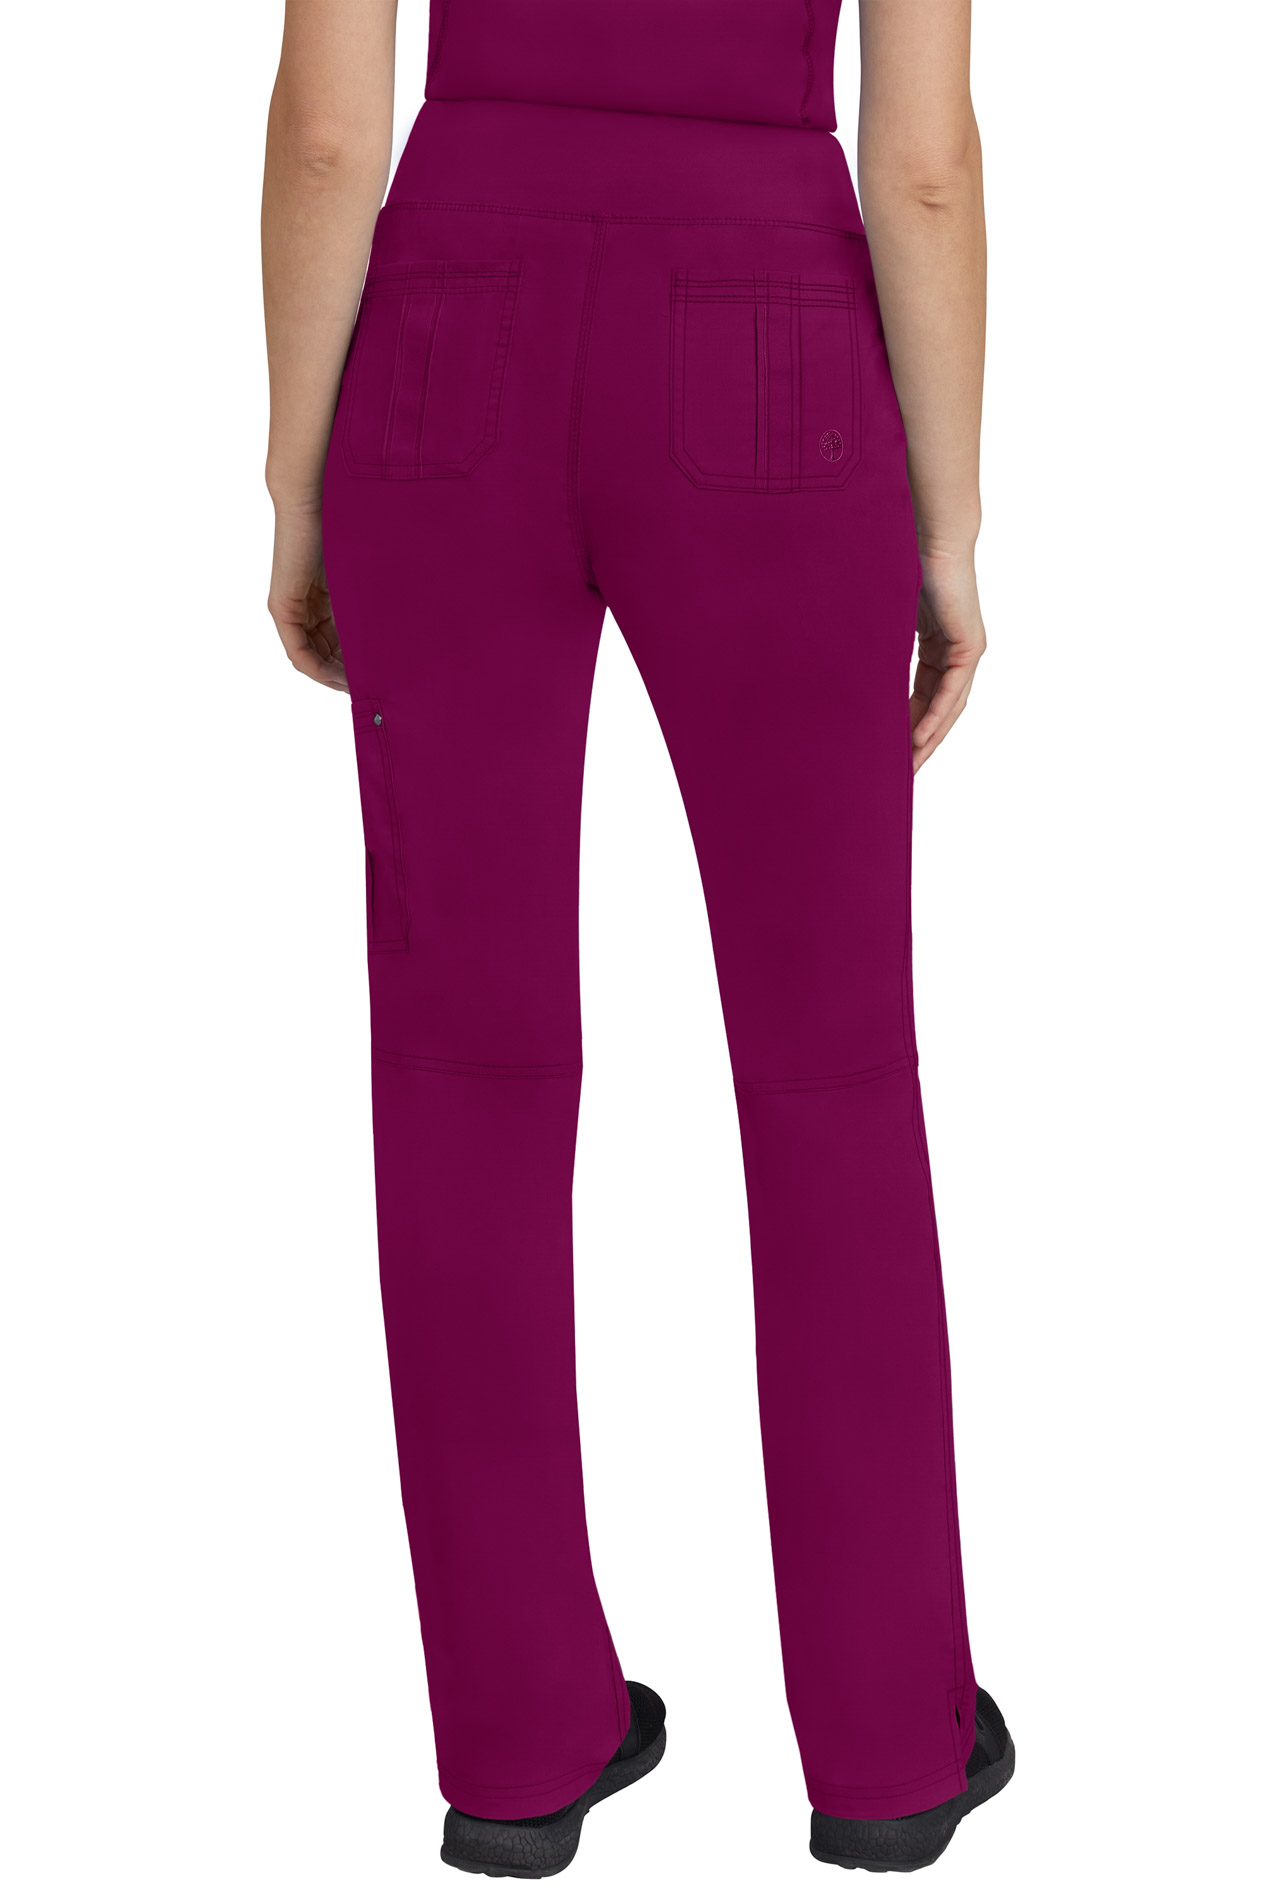 Ladies Tori Scrub Pants by Purple Label - Wine - Uniform Edit